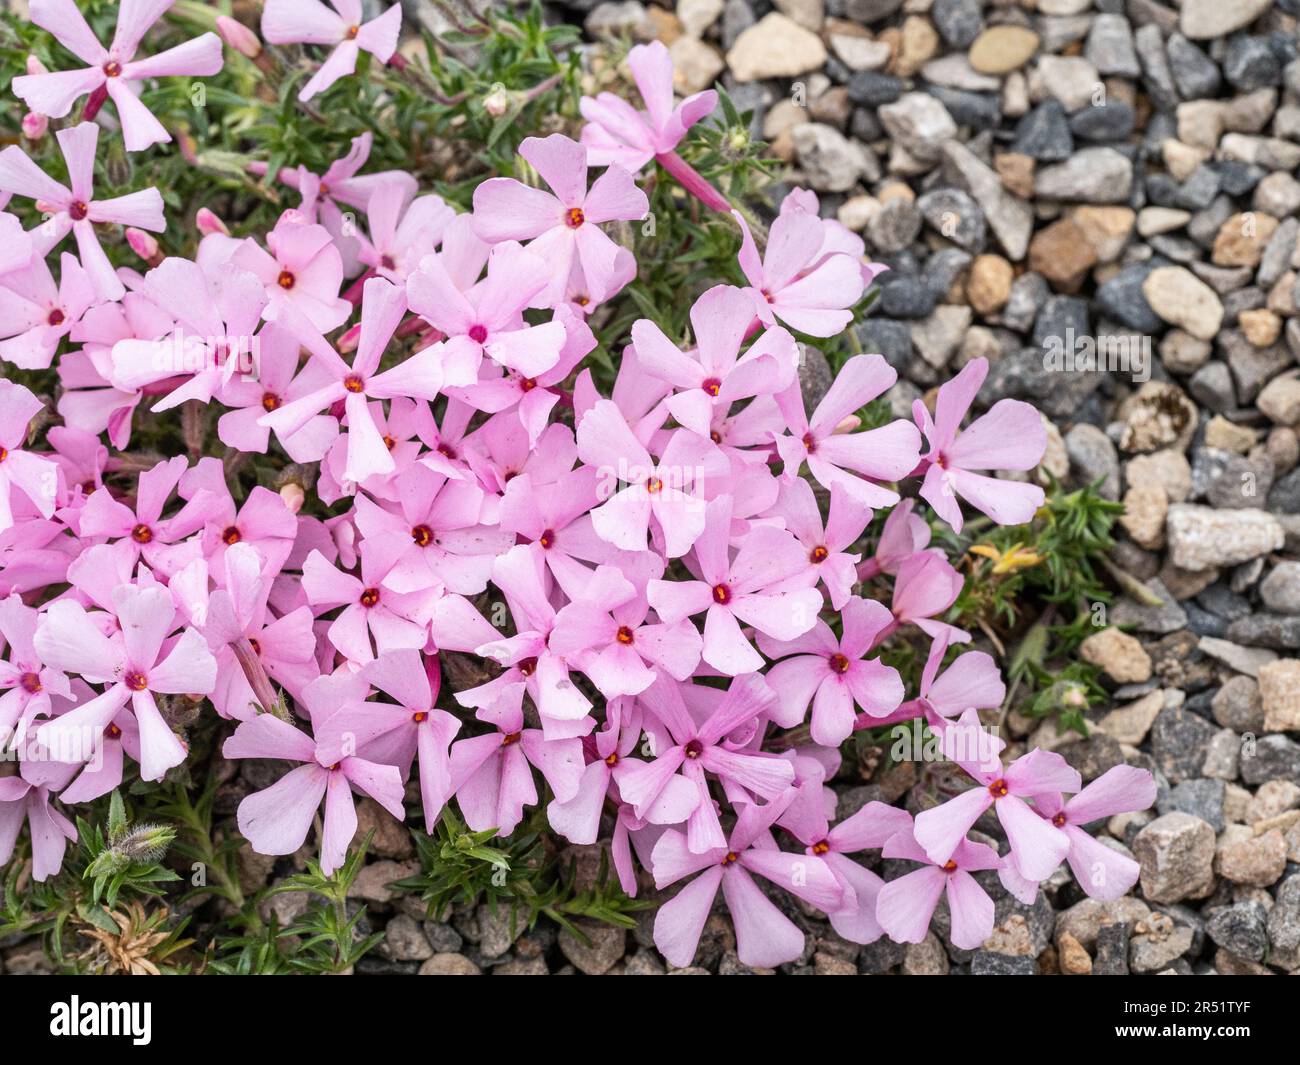 A close up of a group of shell pink flowers of the alpine phlox Phlox douglasii 'Boranovice' Stock Photo